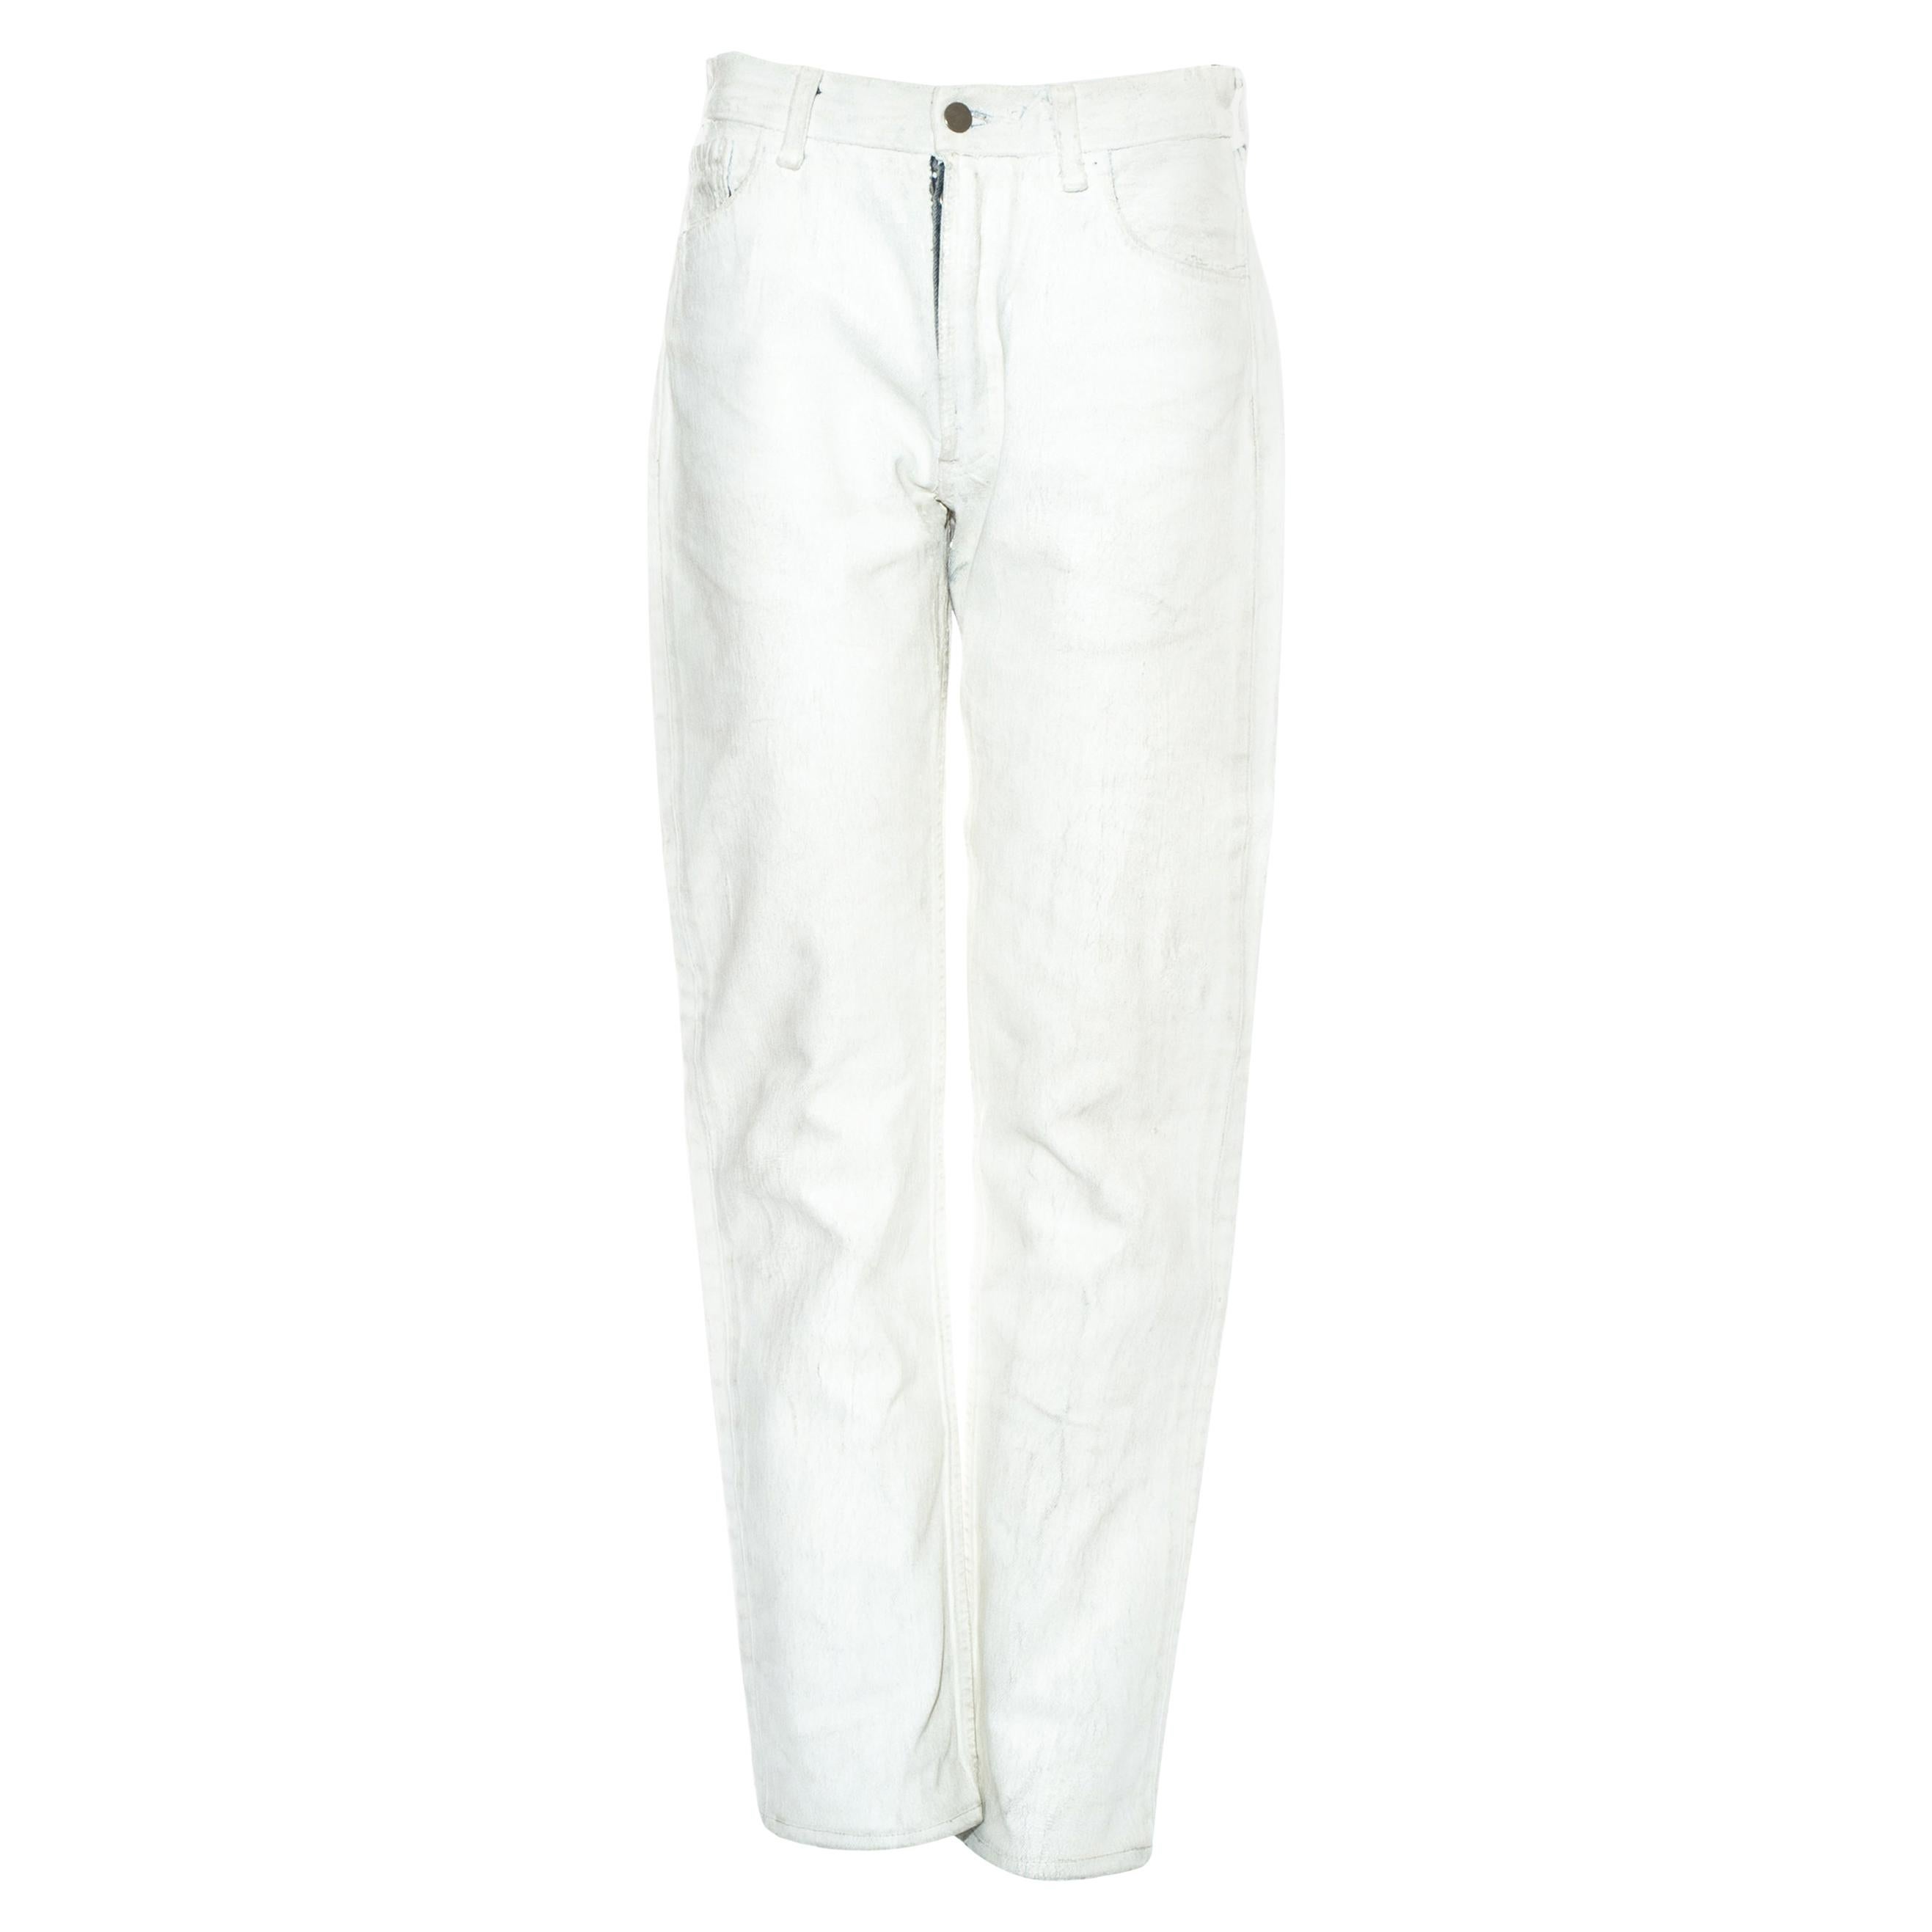 Margiela Artisanal white painted denim jean pants, fw 1999 For Sale